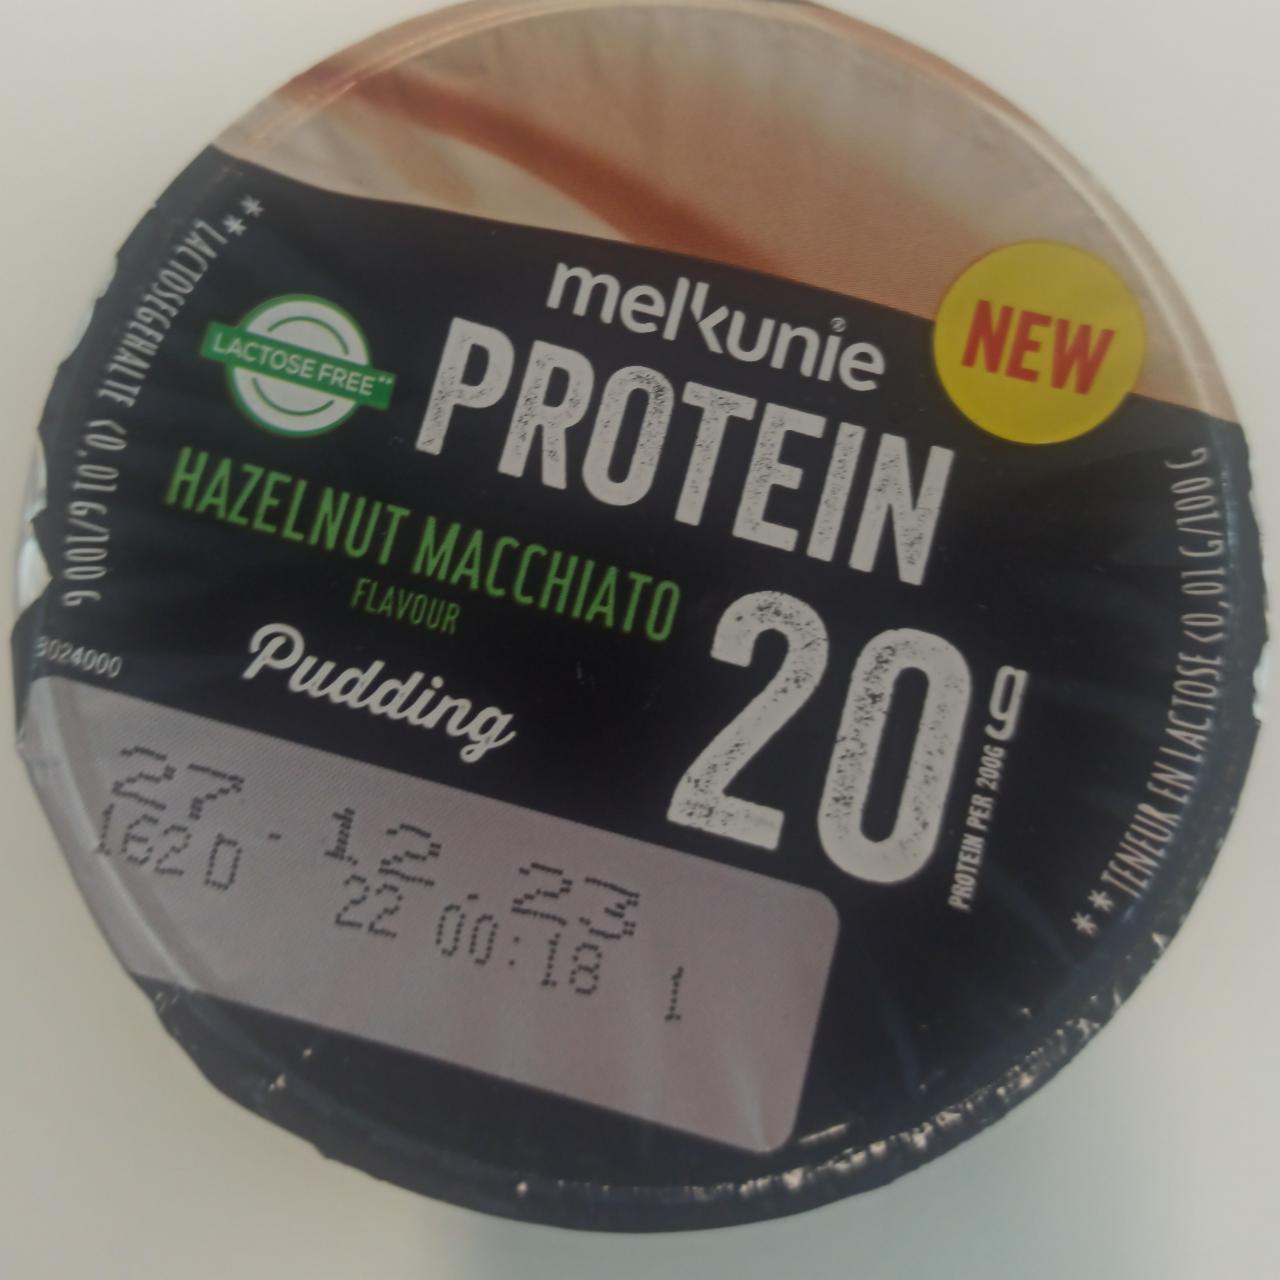 Fotografie - Protein Hazelnut macchiato flavour Pudding Melkunie